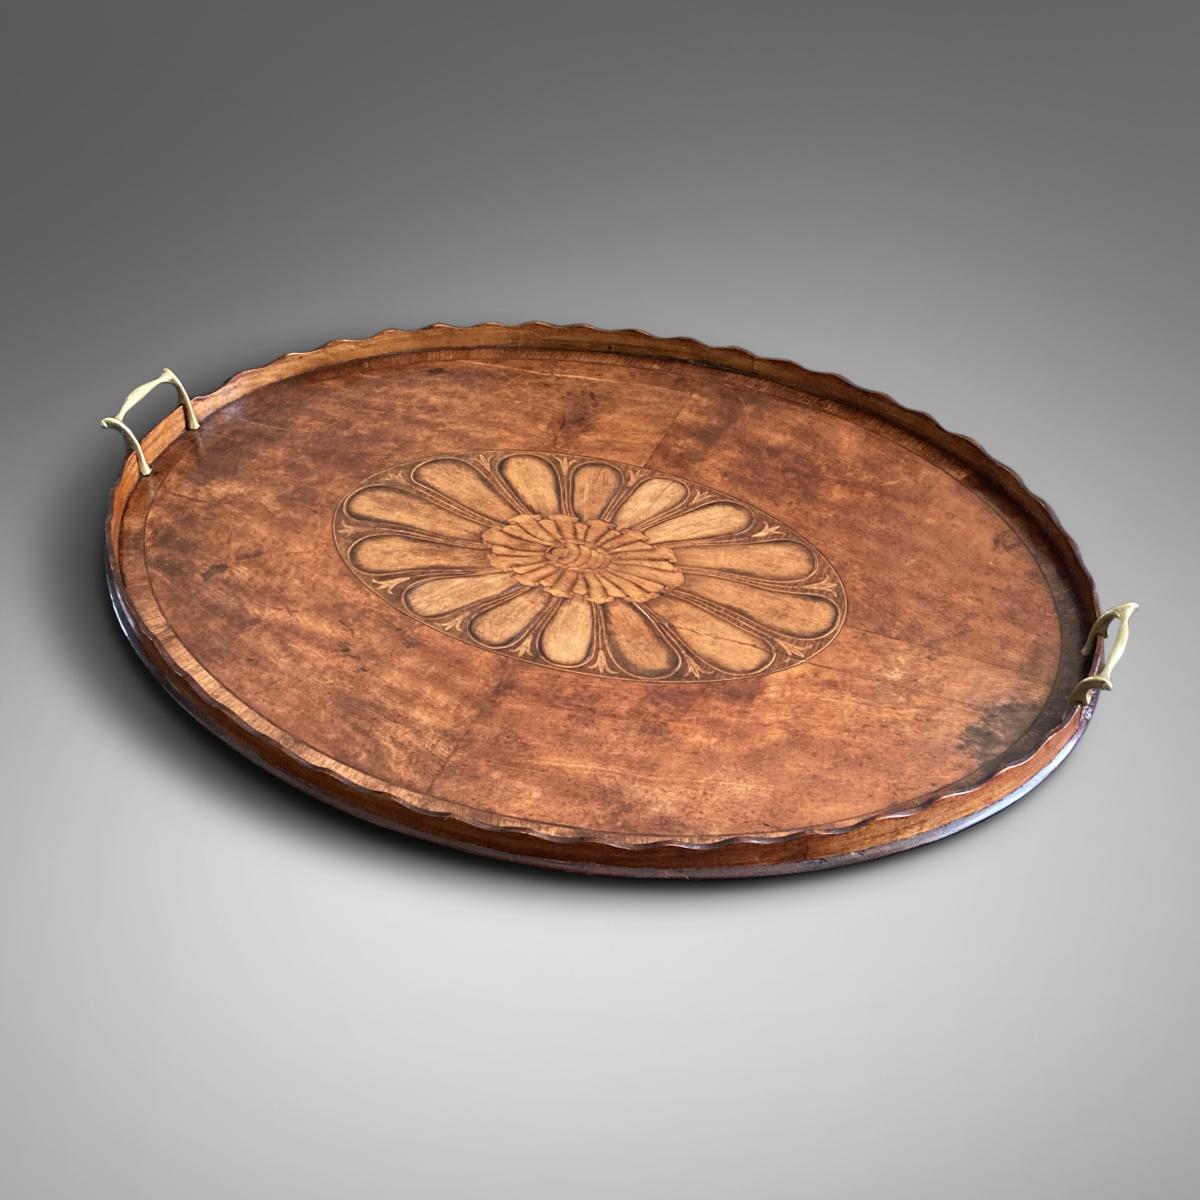 George III oval tray